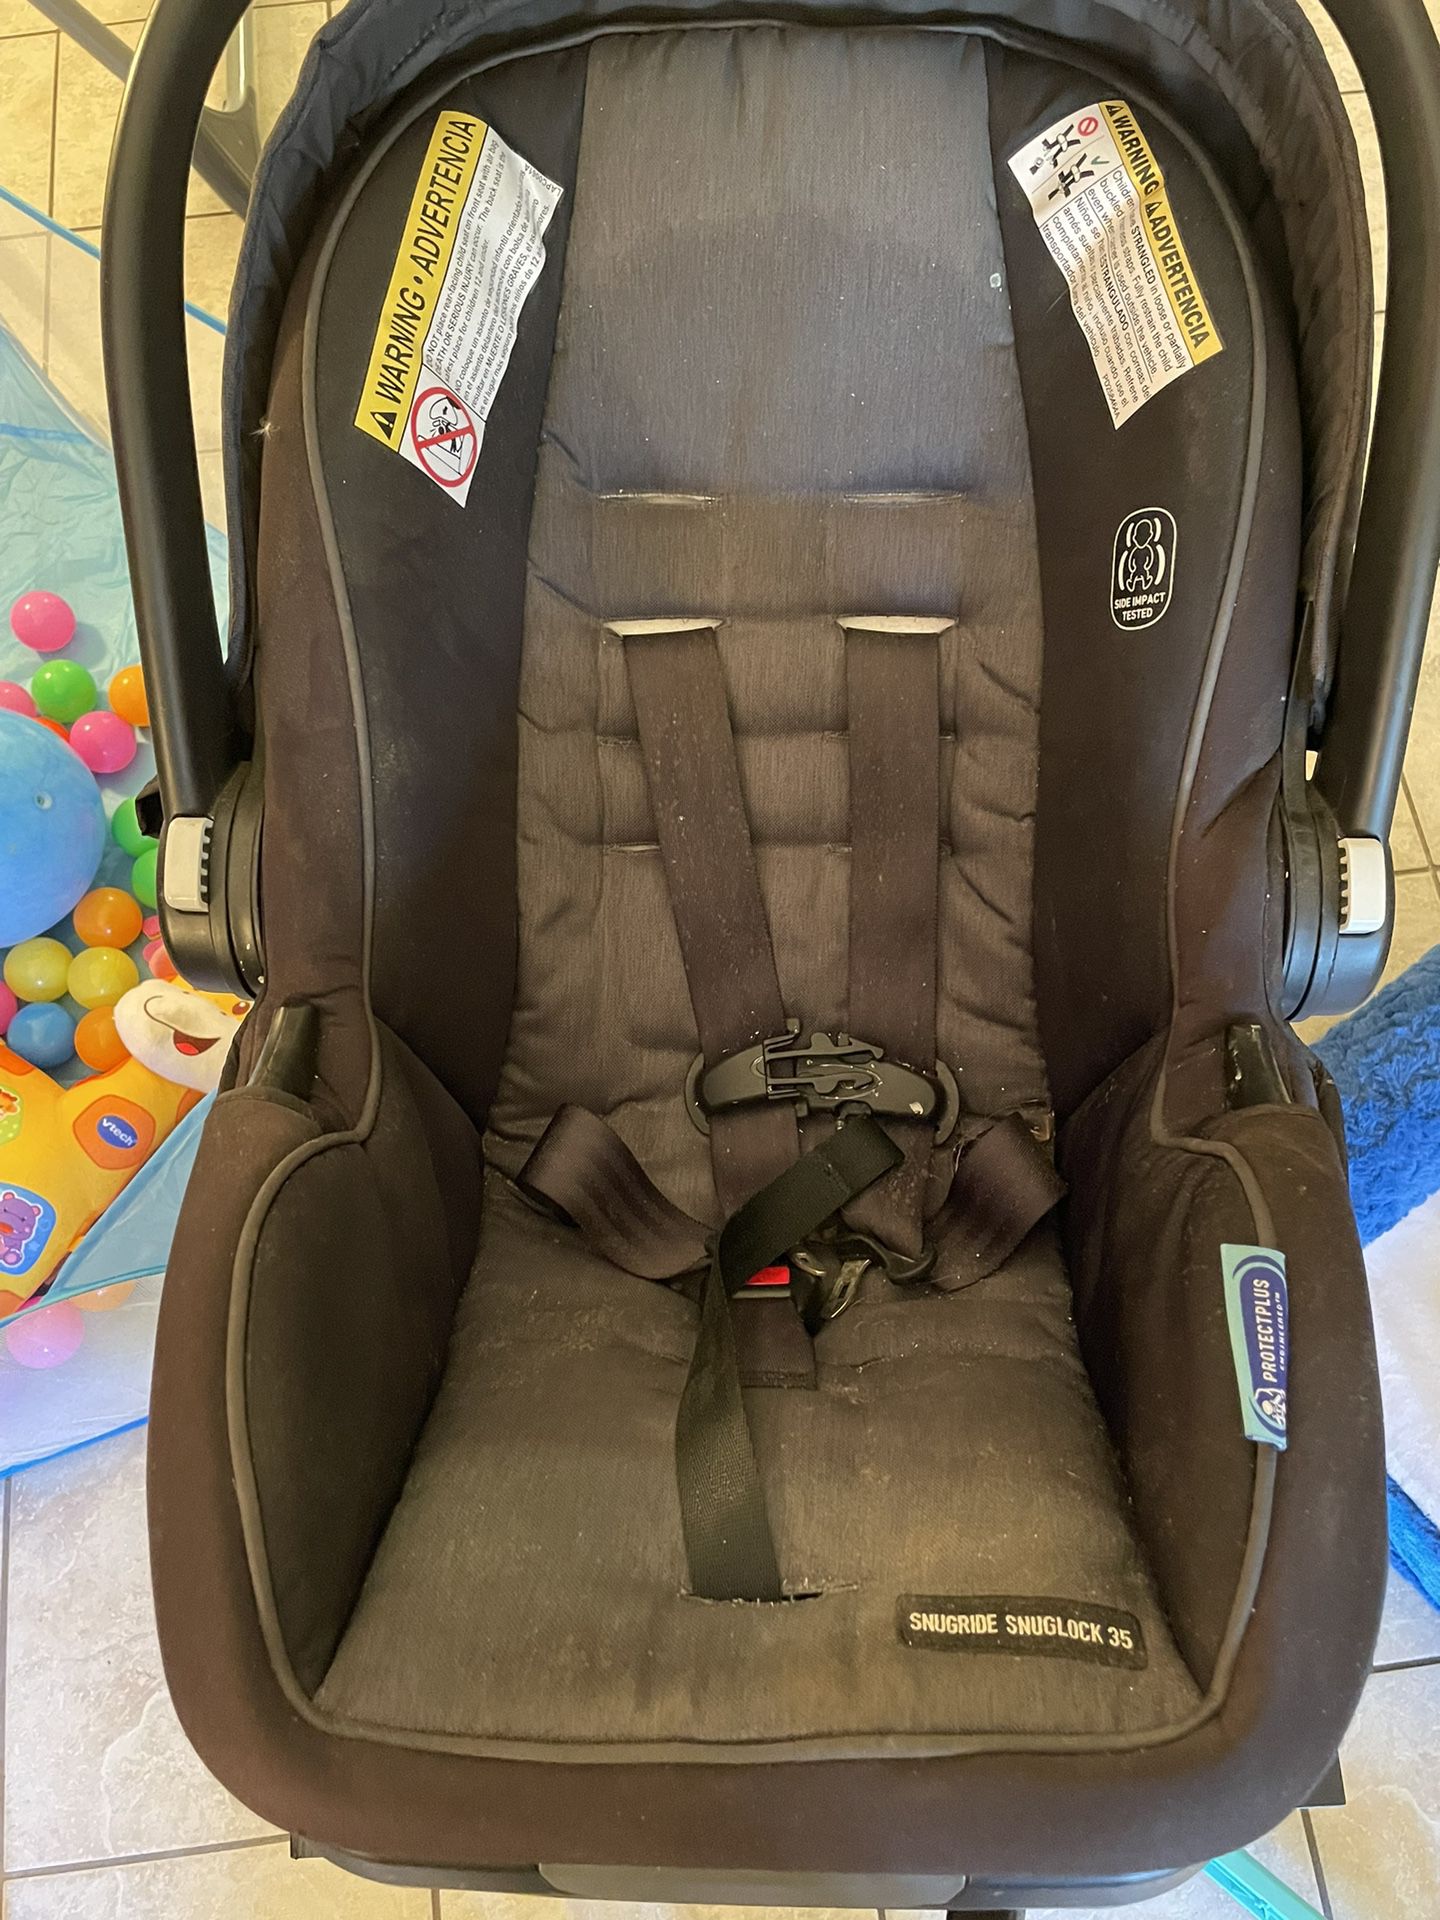 Grace Snugg Ride 35 Infant Car Seat